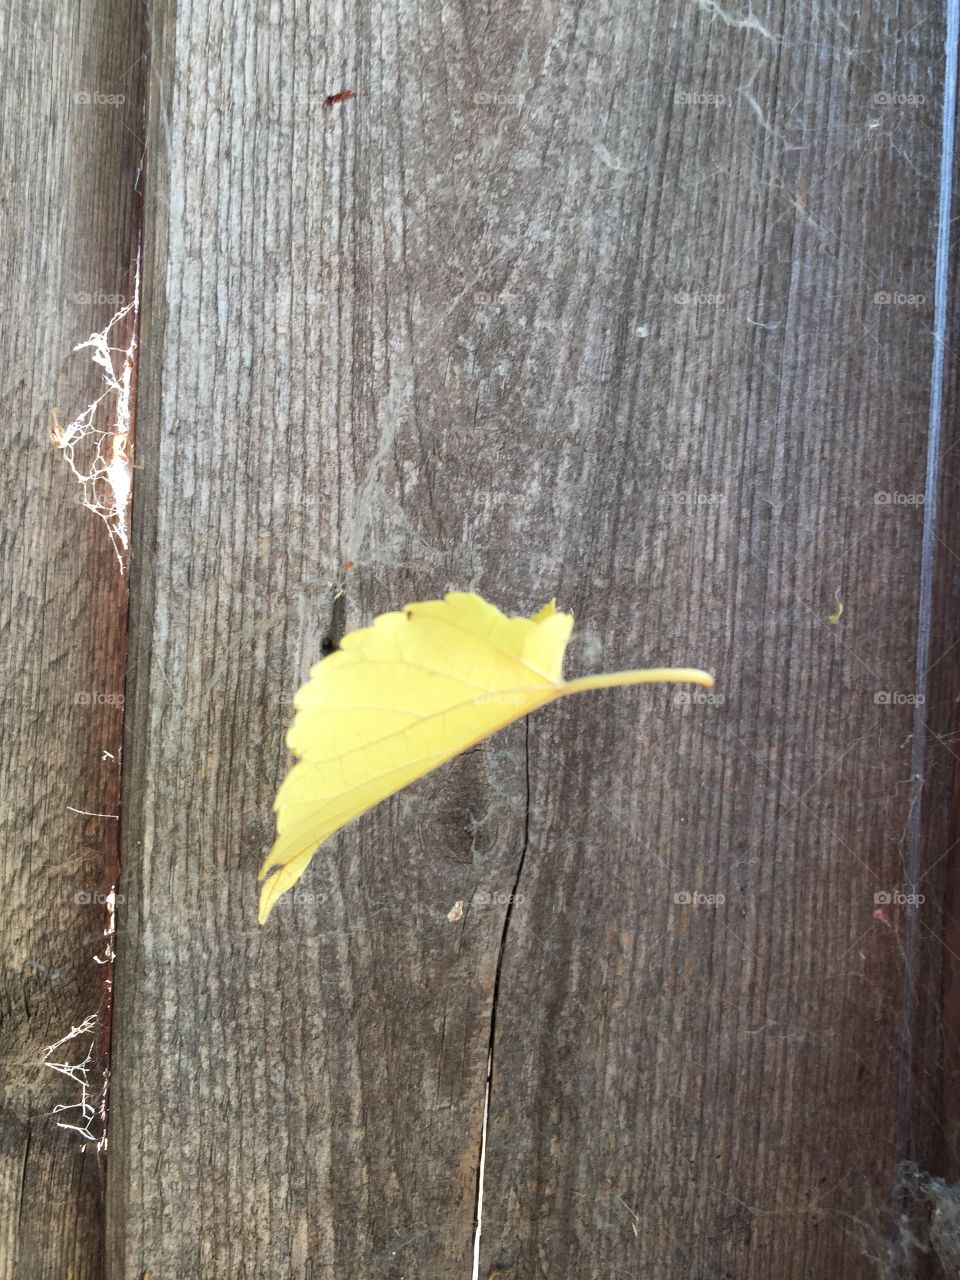 Falling leaf 